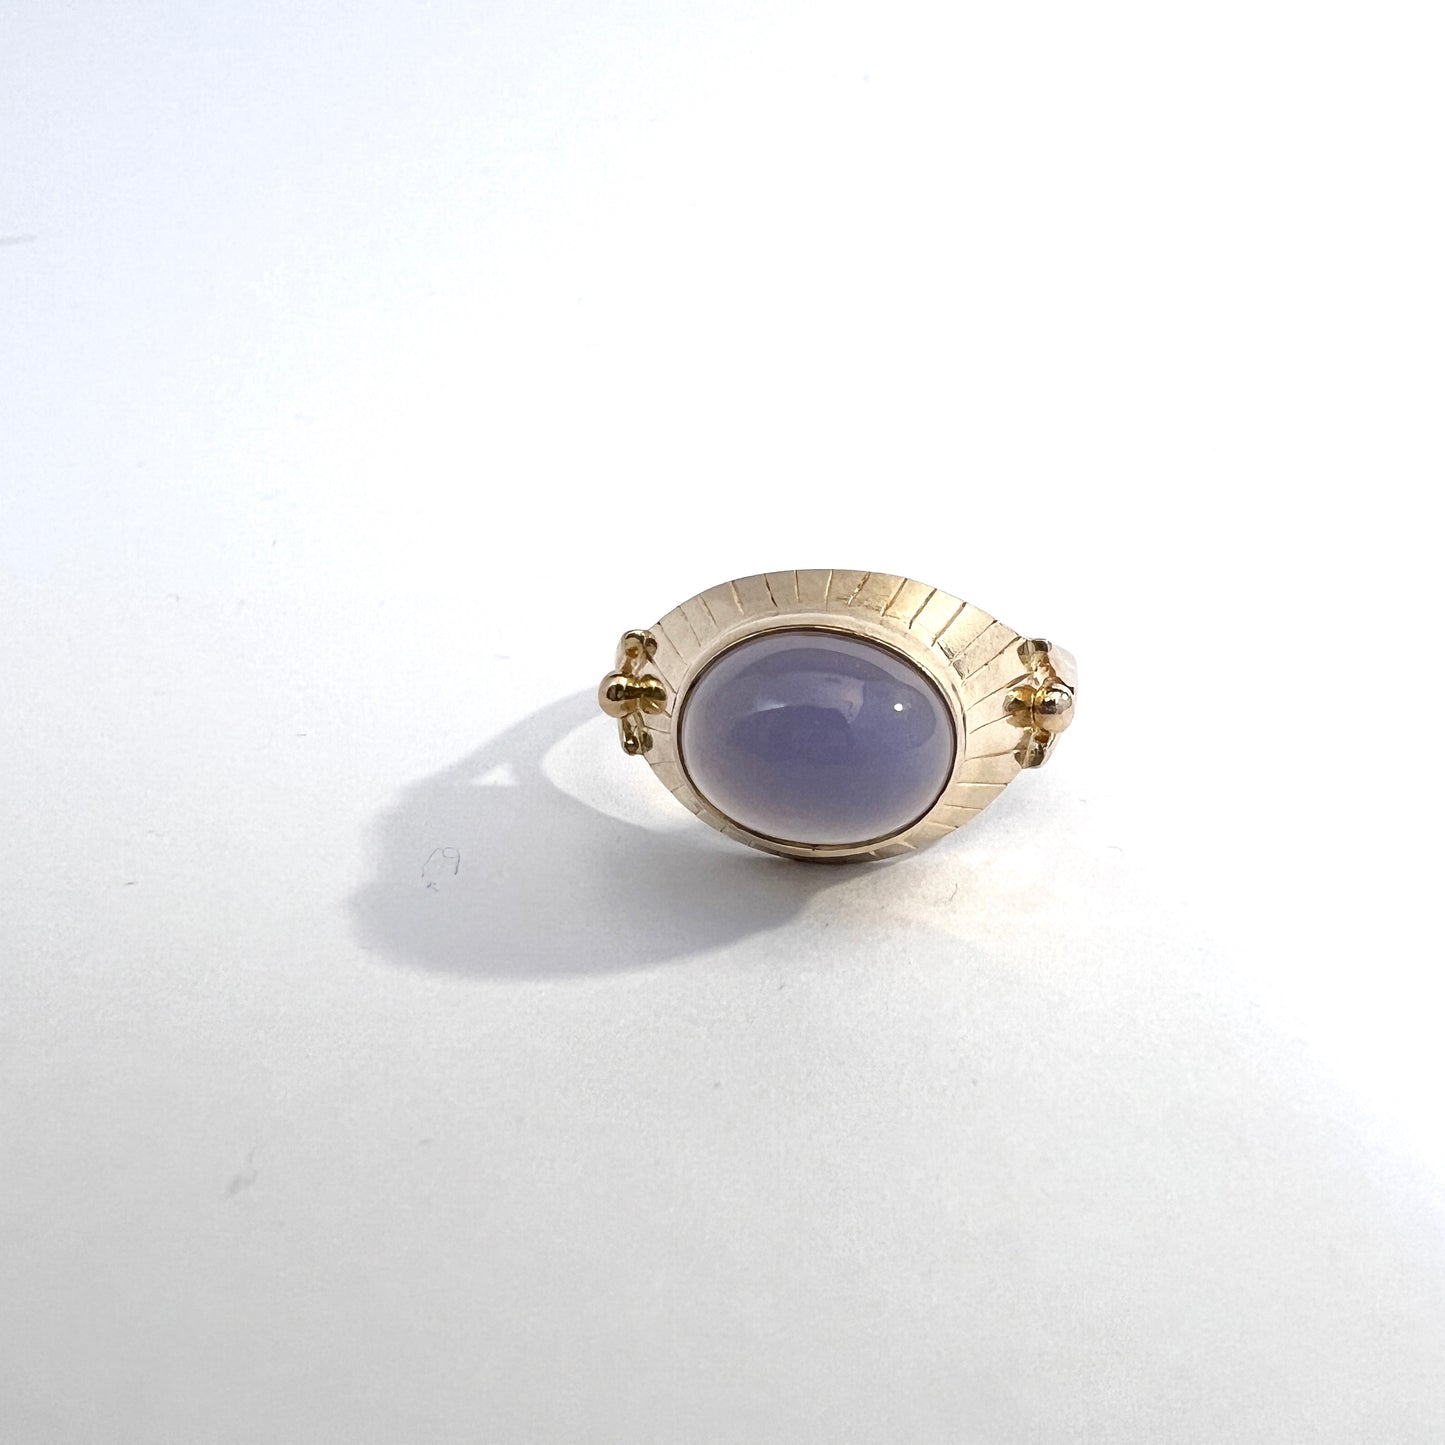 Atelje Stigbert Sweden 1955. Vintage Mid-century Modern 18k Gold Chalcedony Ring.